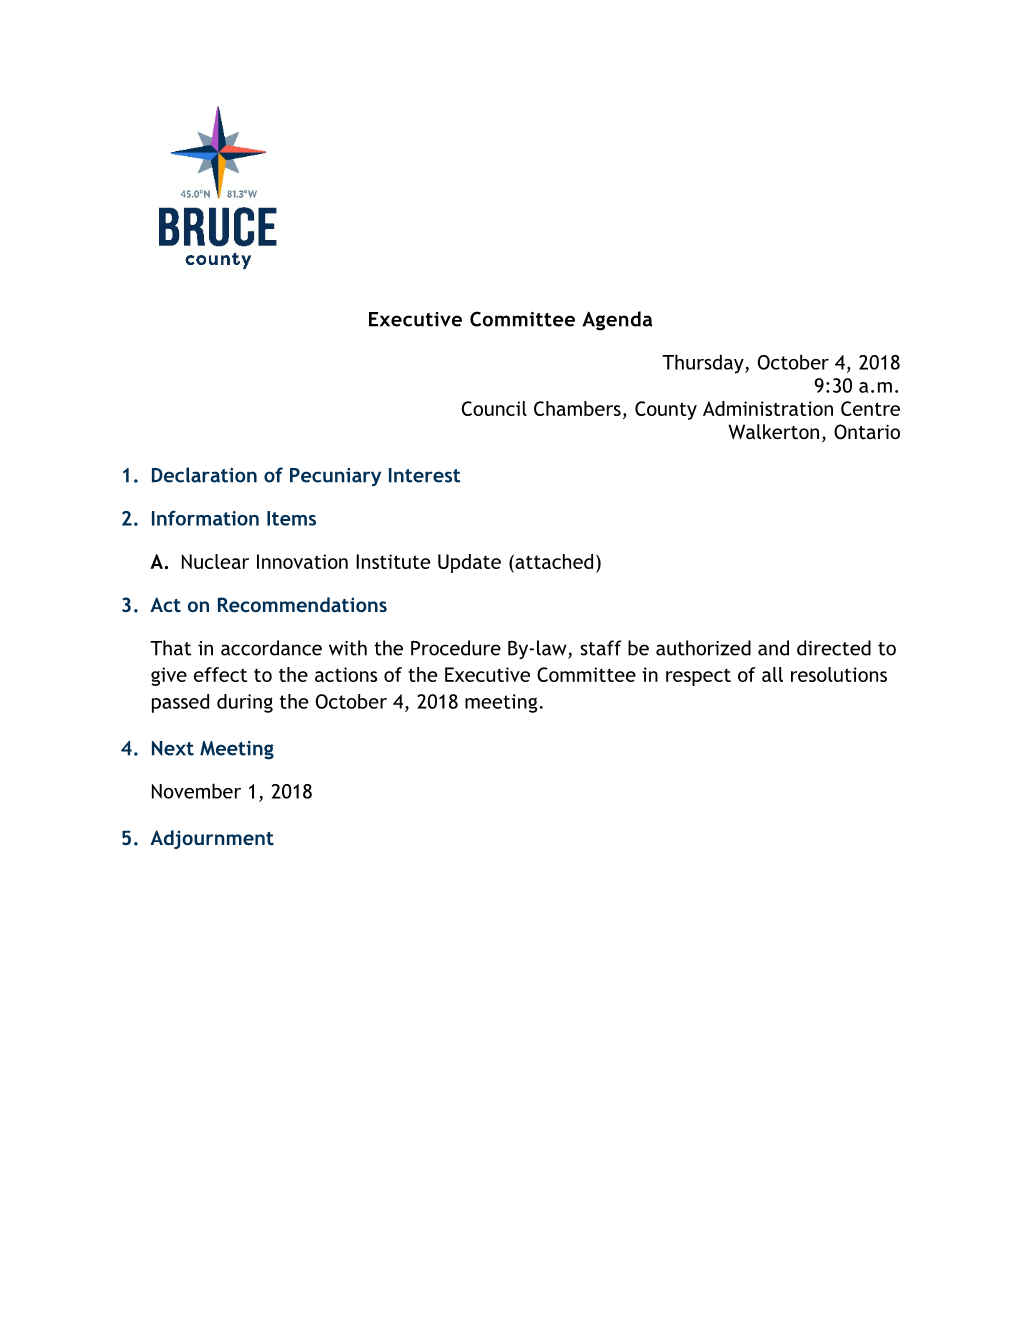 Executive Committee Agenda Thursday, October 4